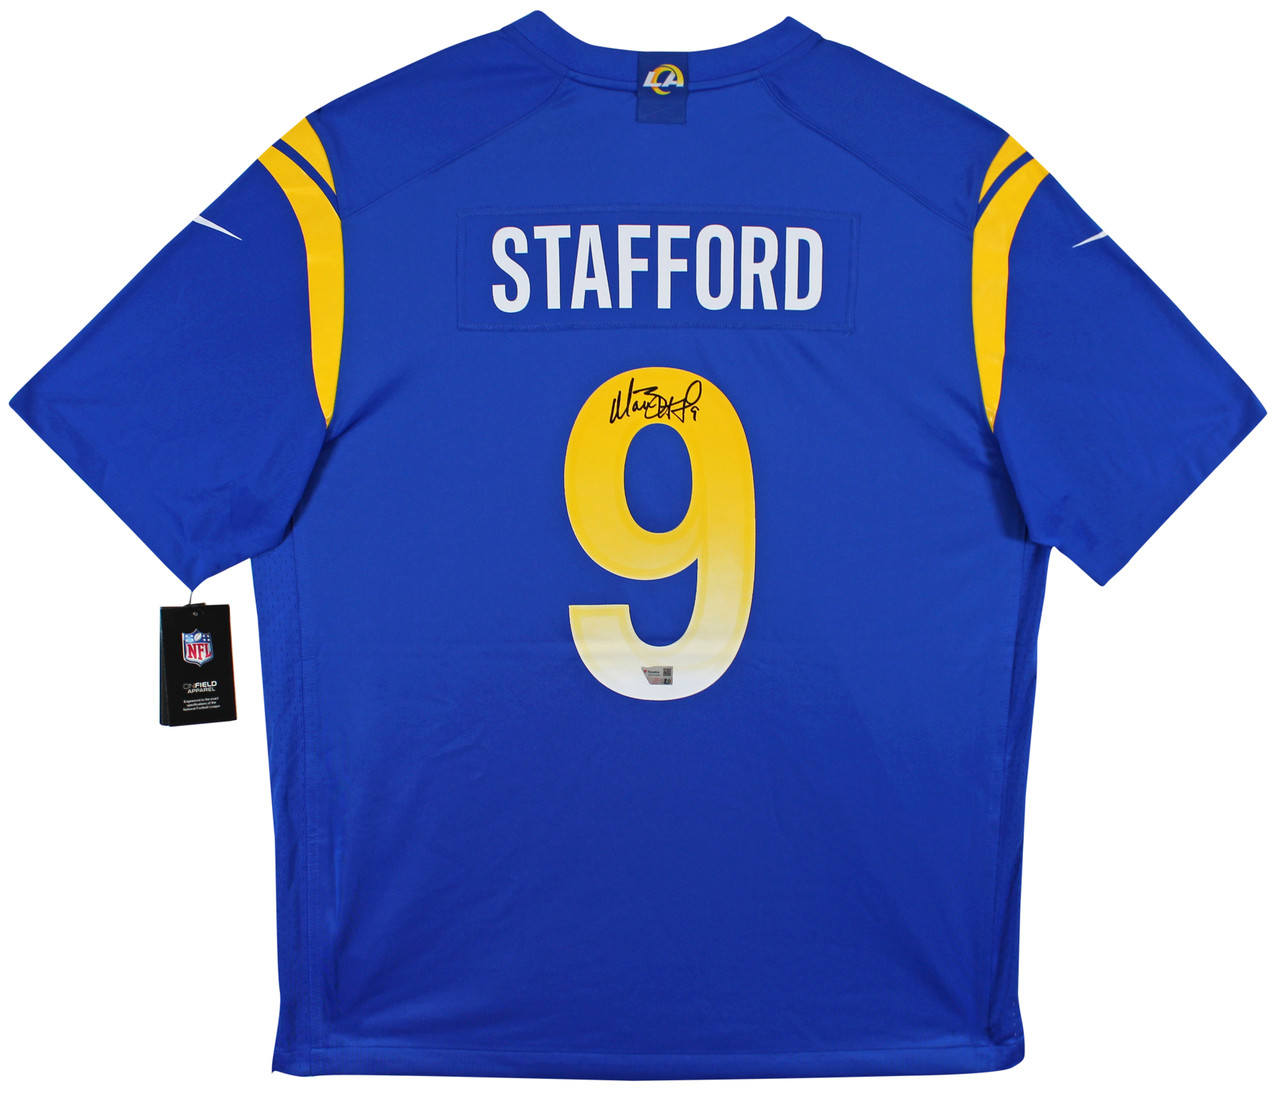 Matthew Stafford Signed Rams Nike Jersey (Fanatics Hologram